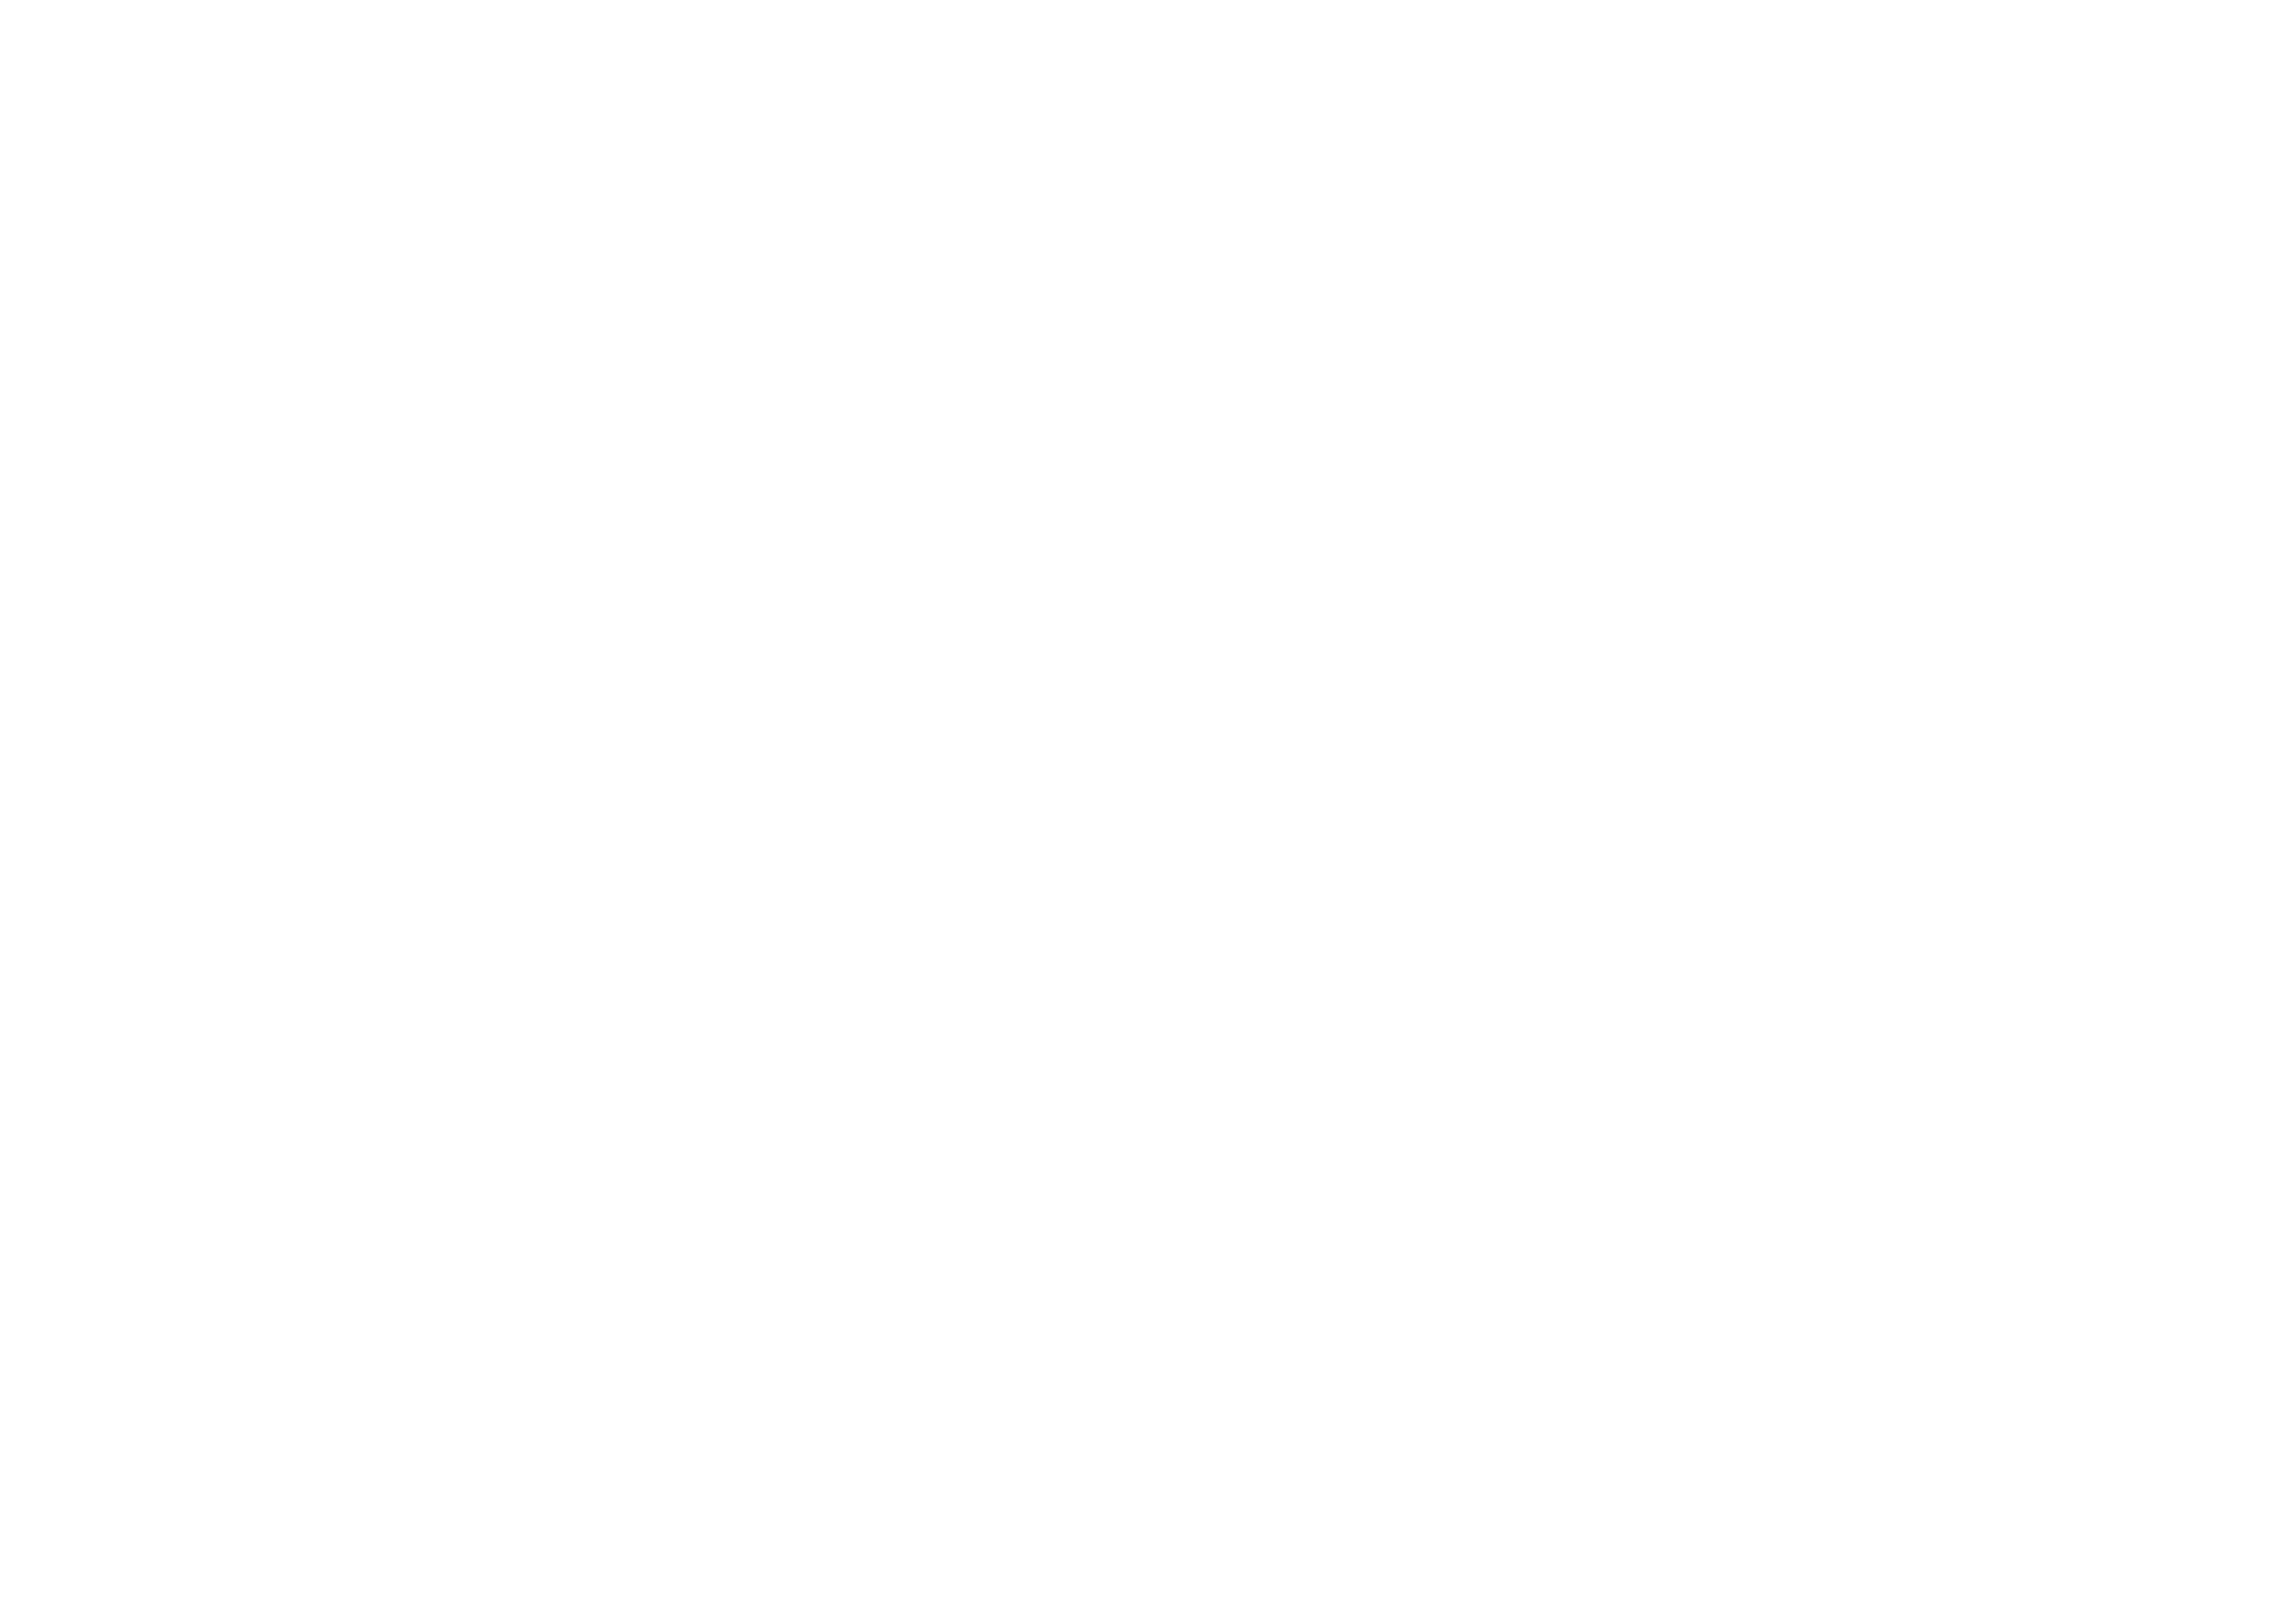 3 Street Gallery